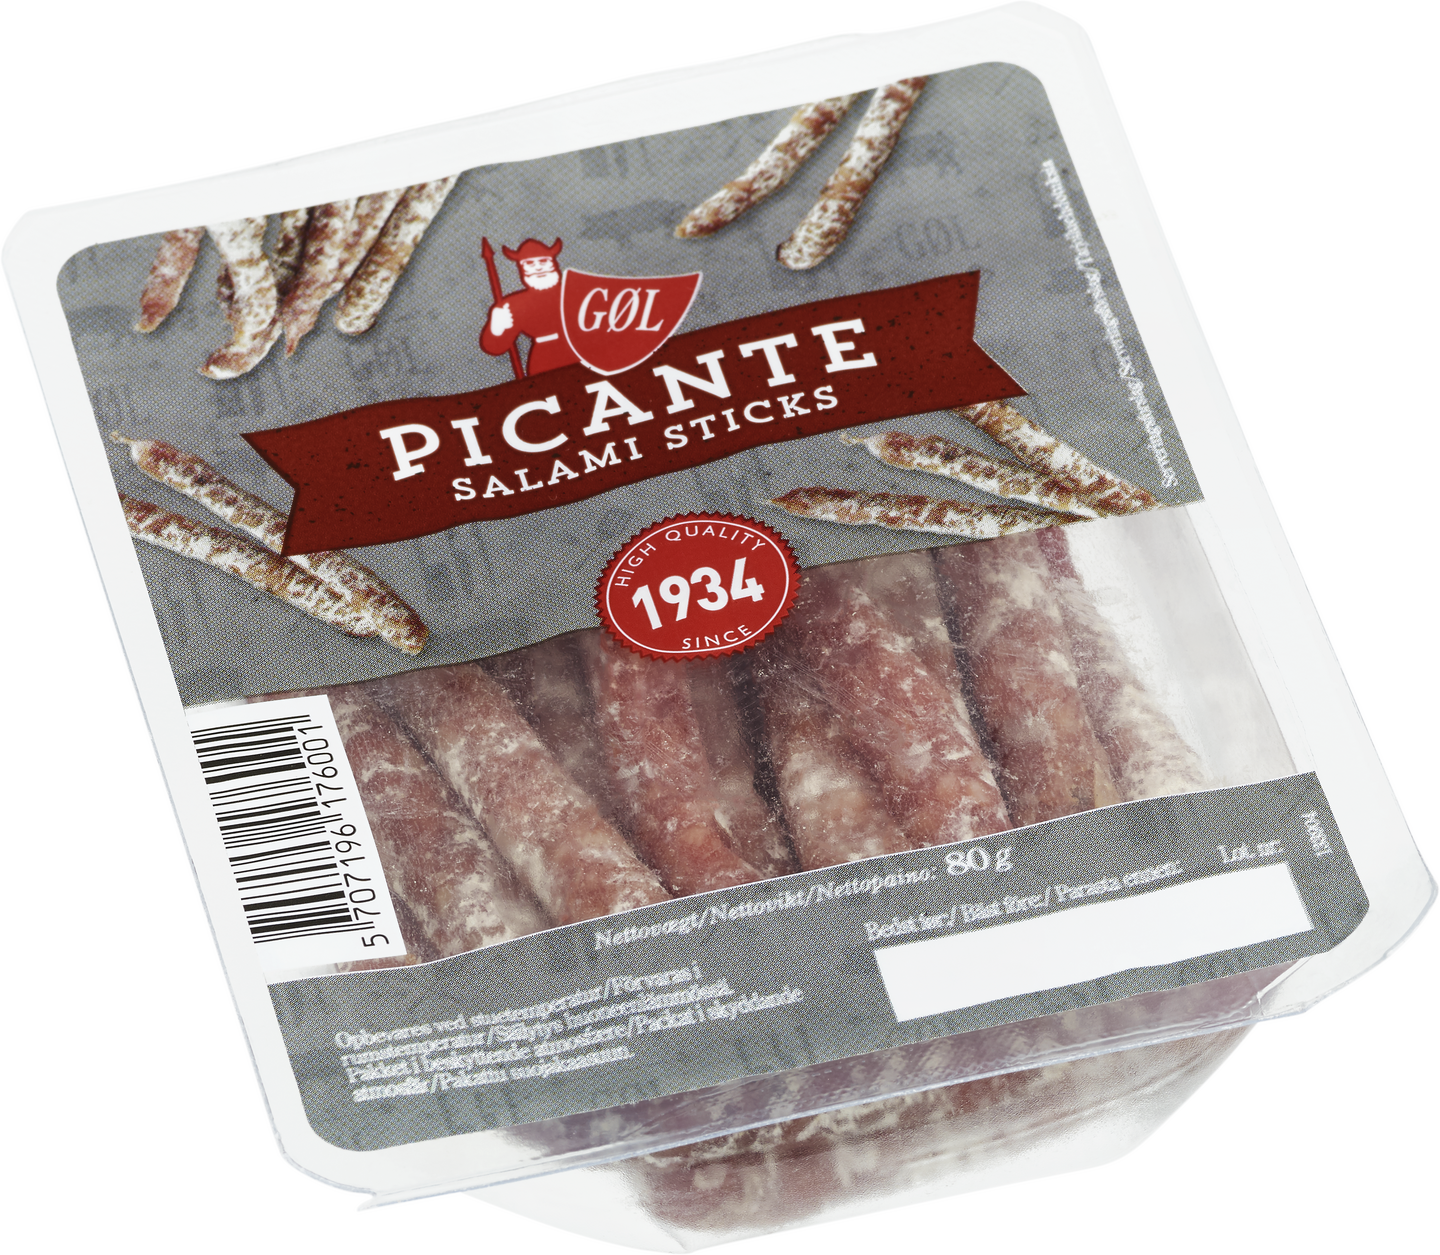 Gøl Picante salami sticks 80g